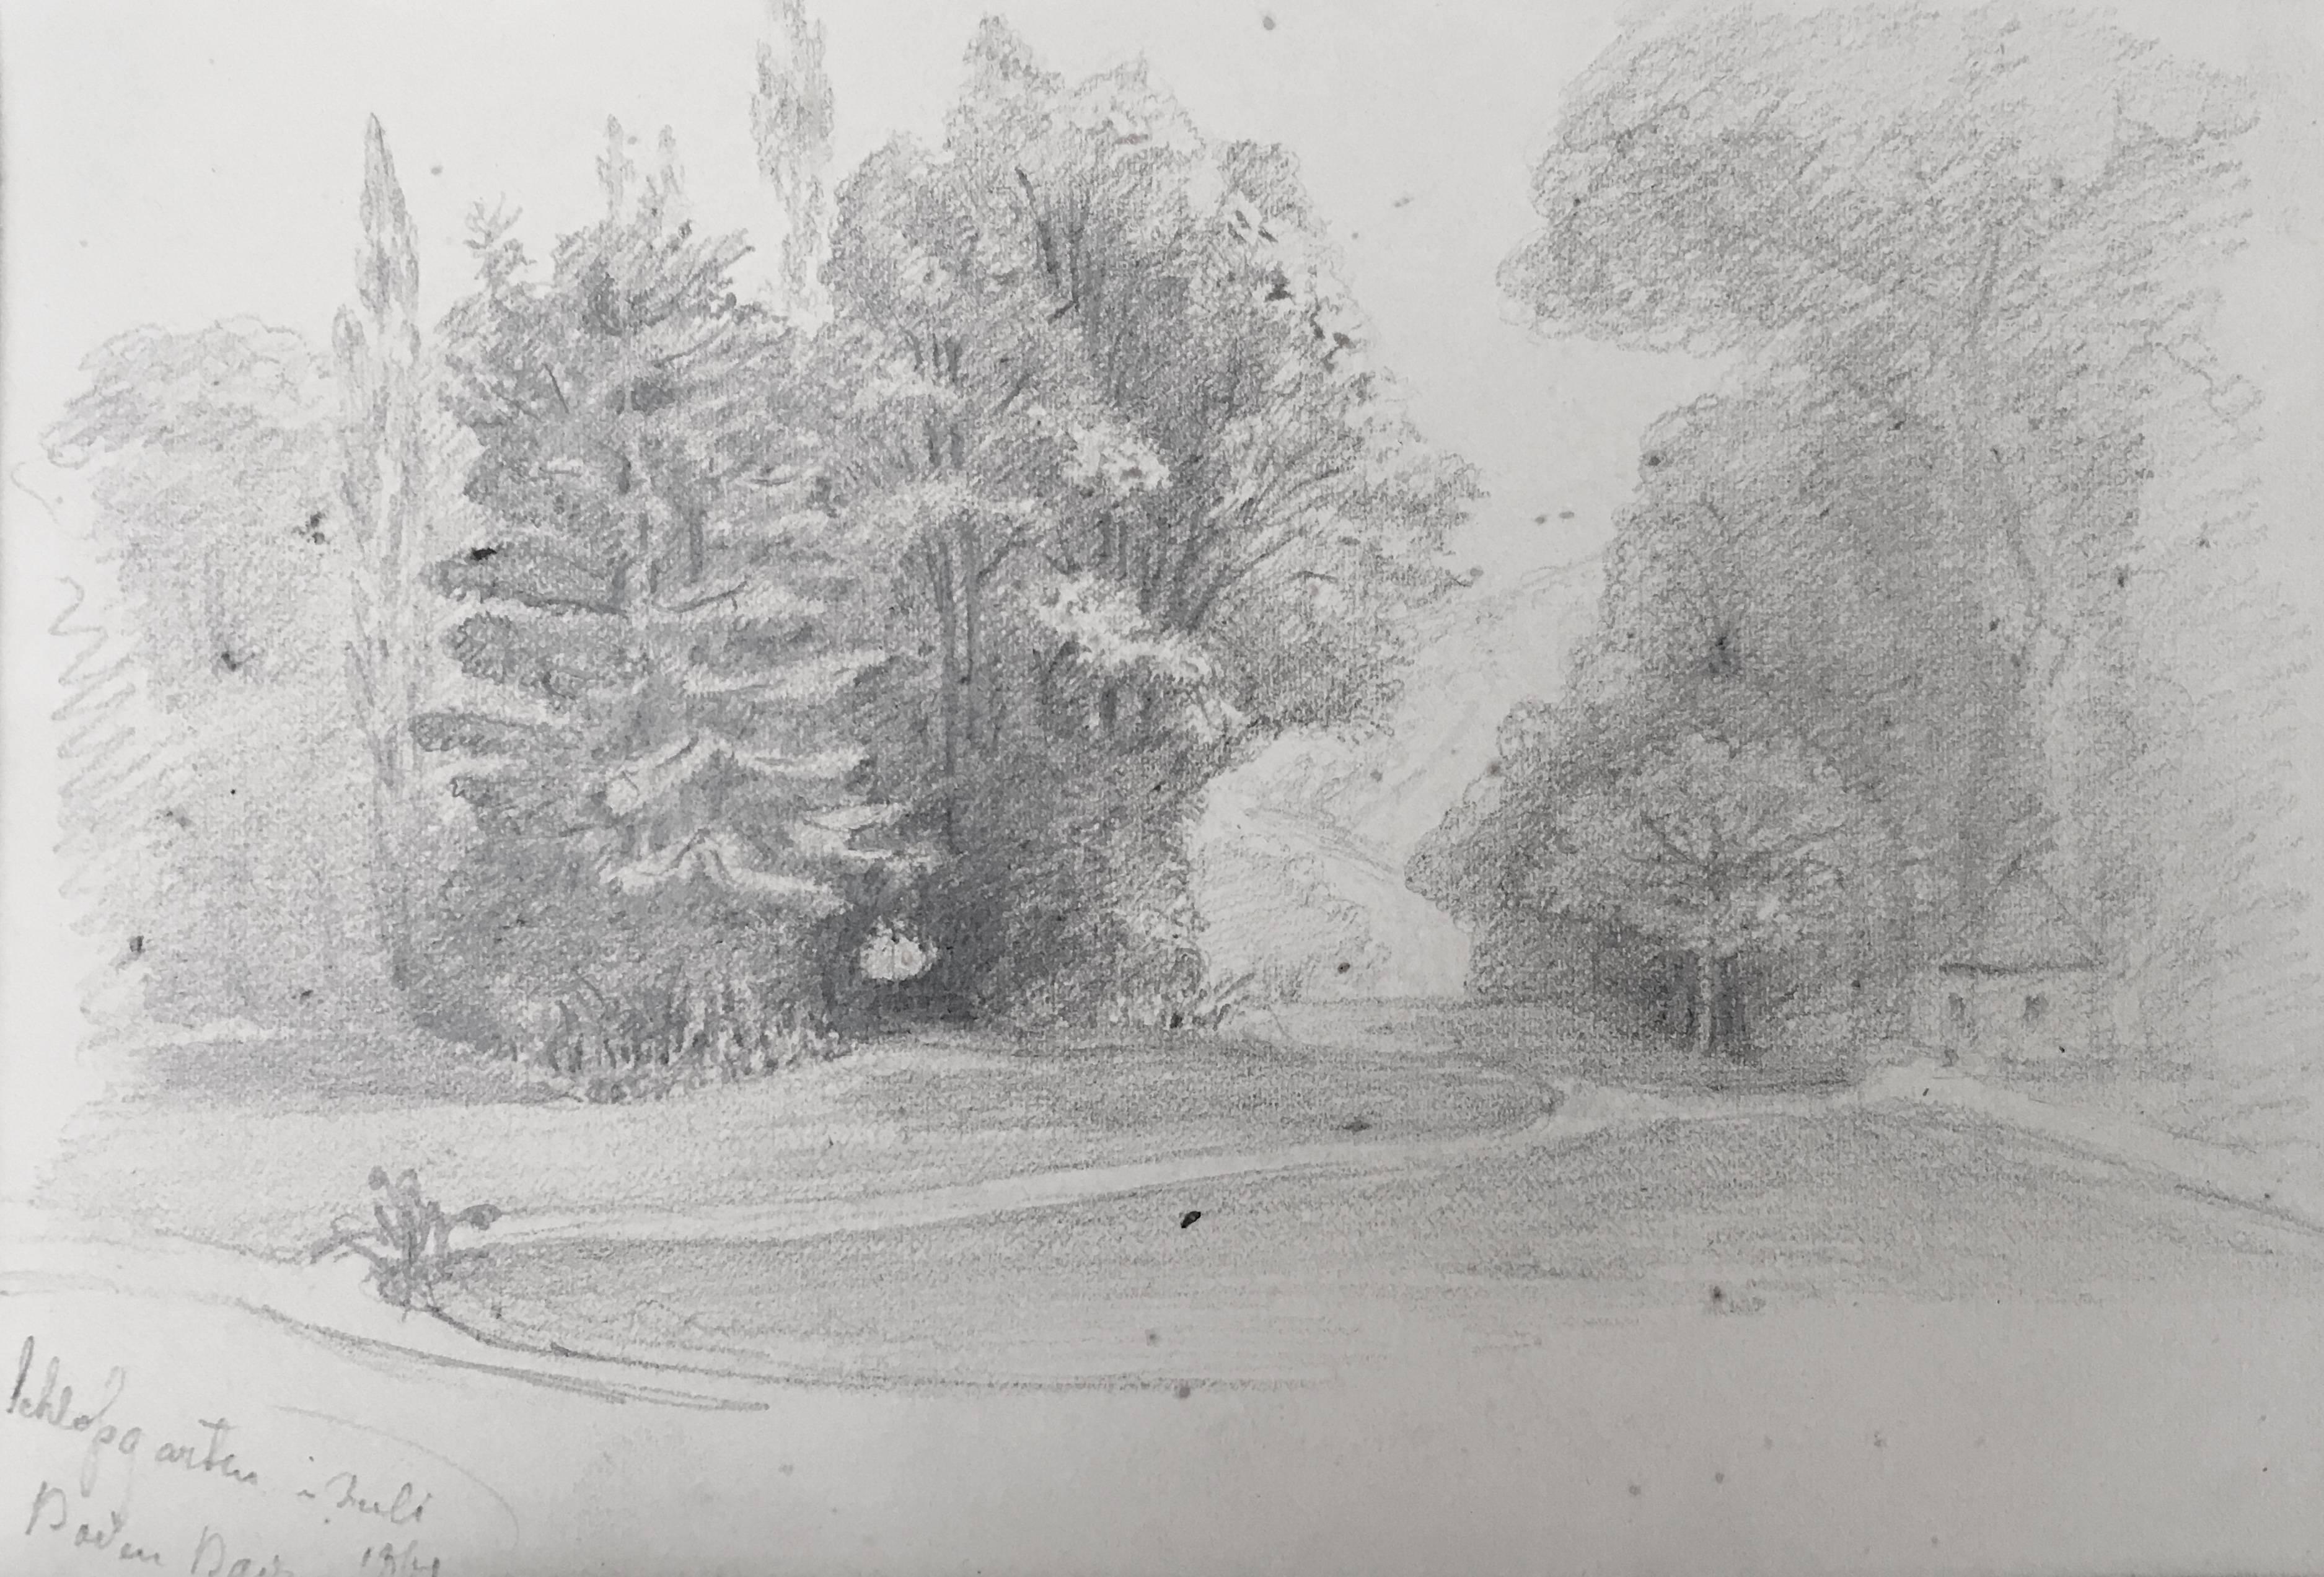 Oscar Andreae: Schlossgarten, Baden Baden, Germany - 1861 drawing